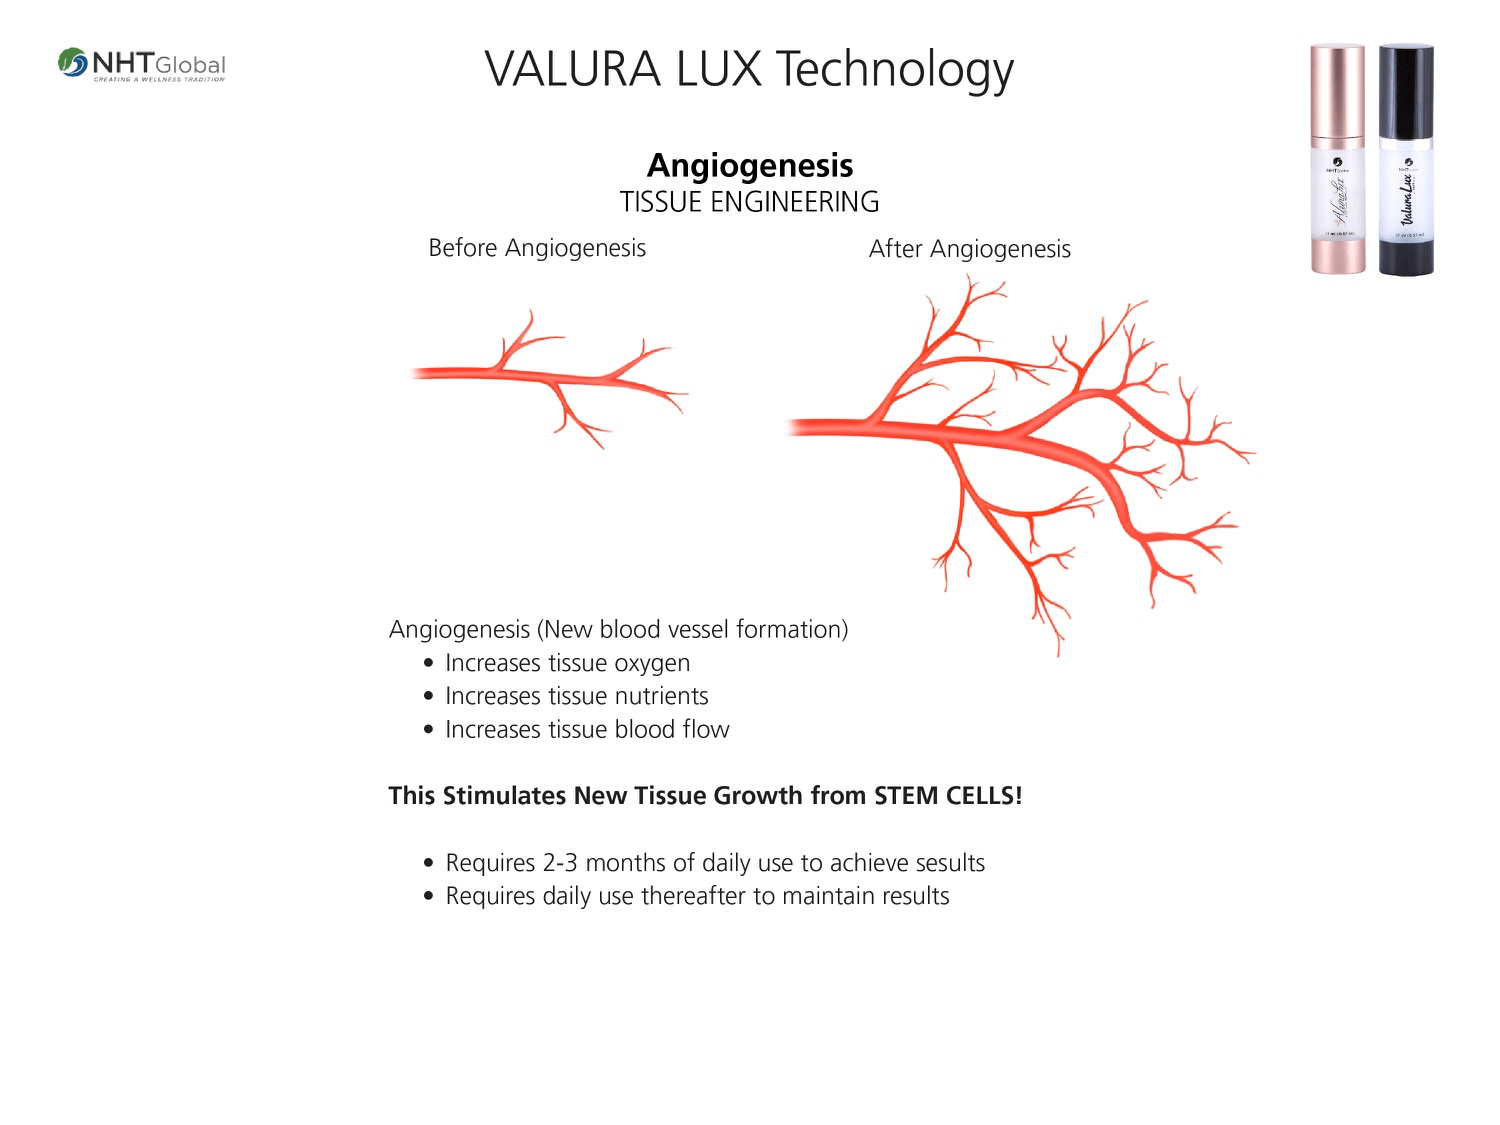 Valura Lux Technology